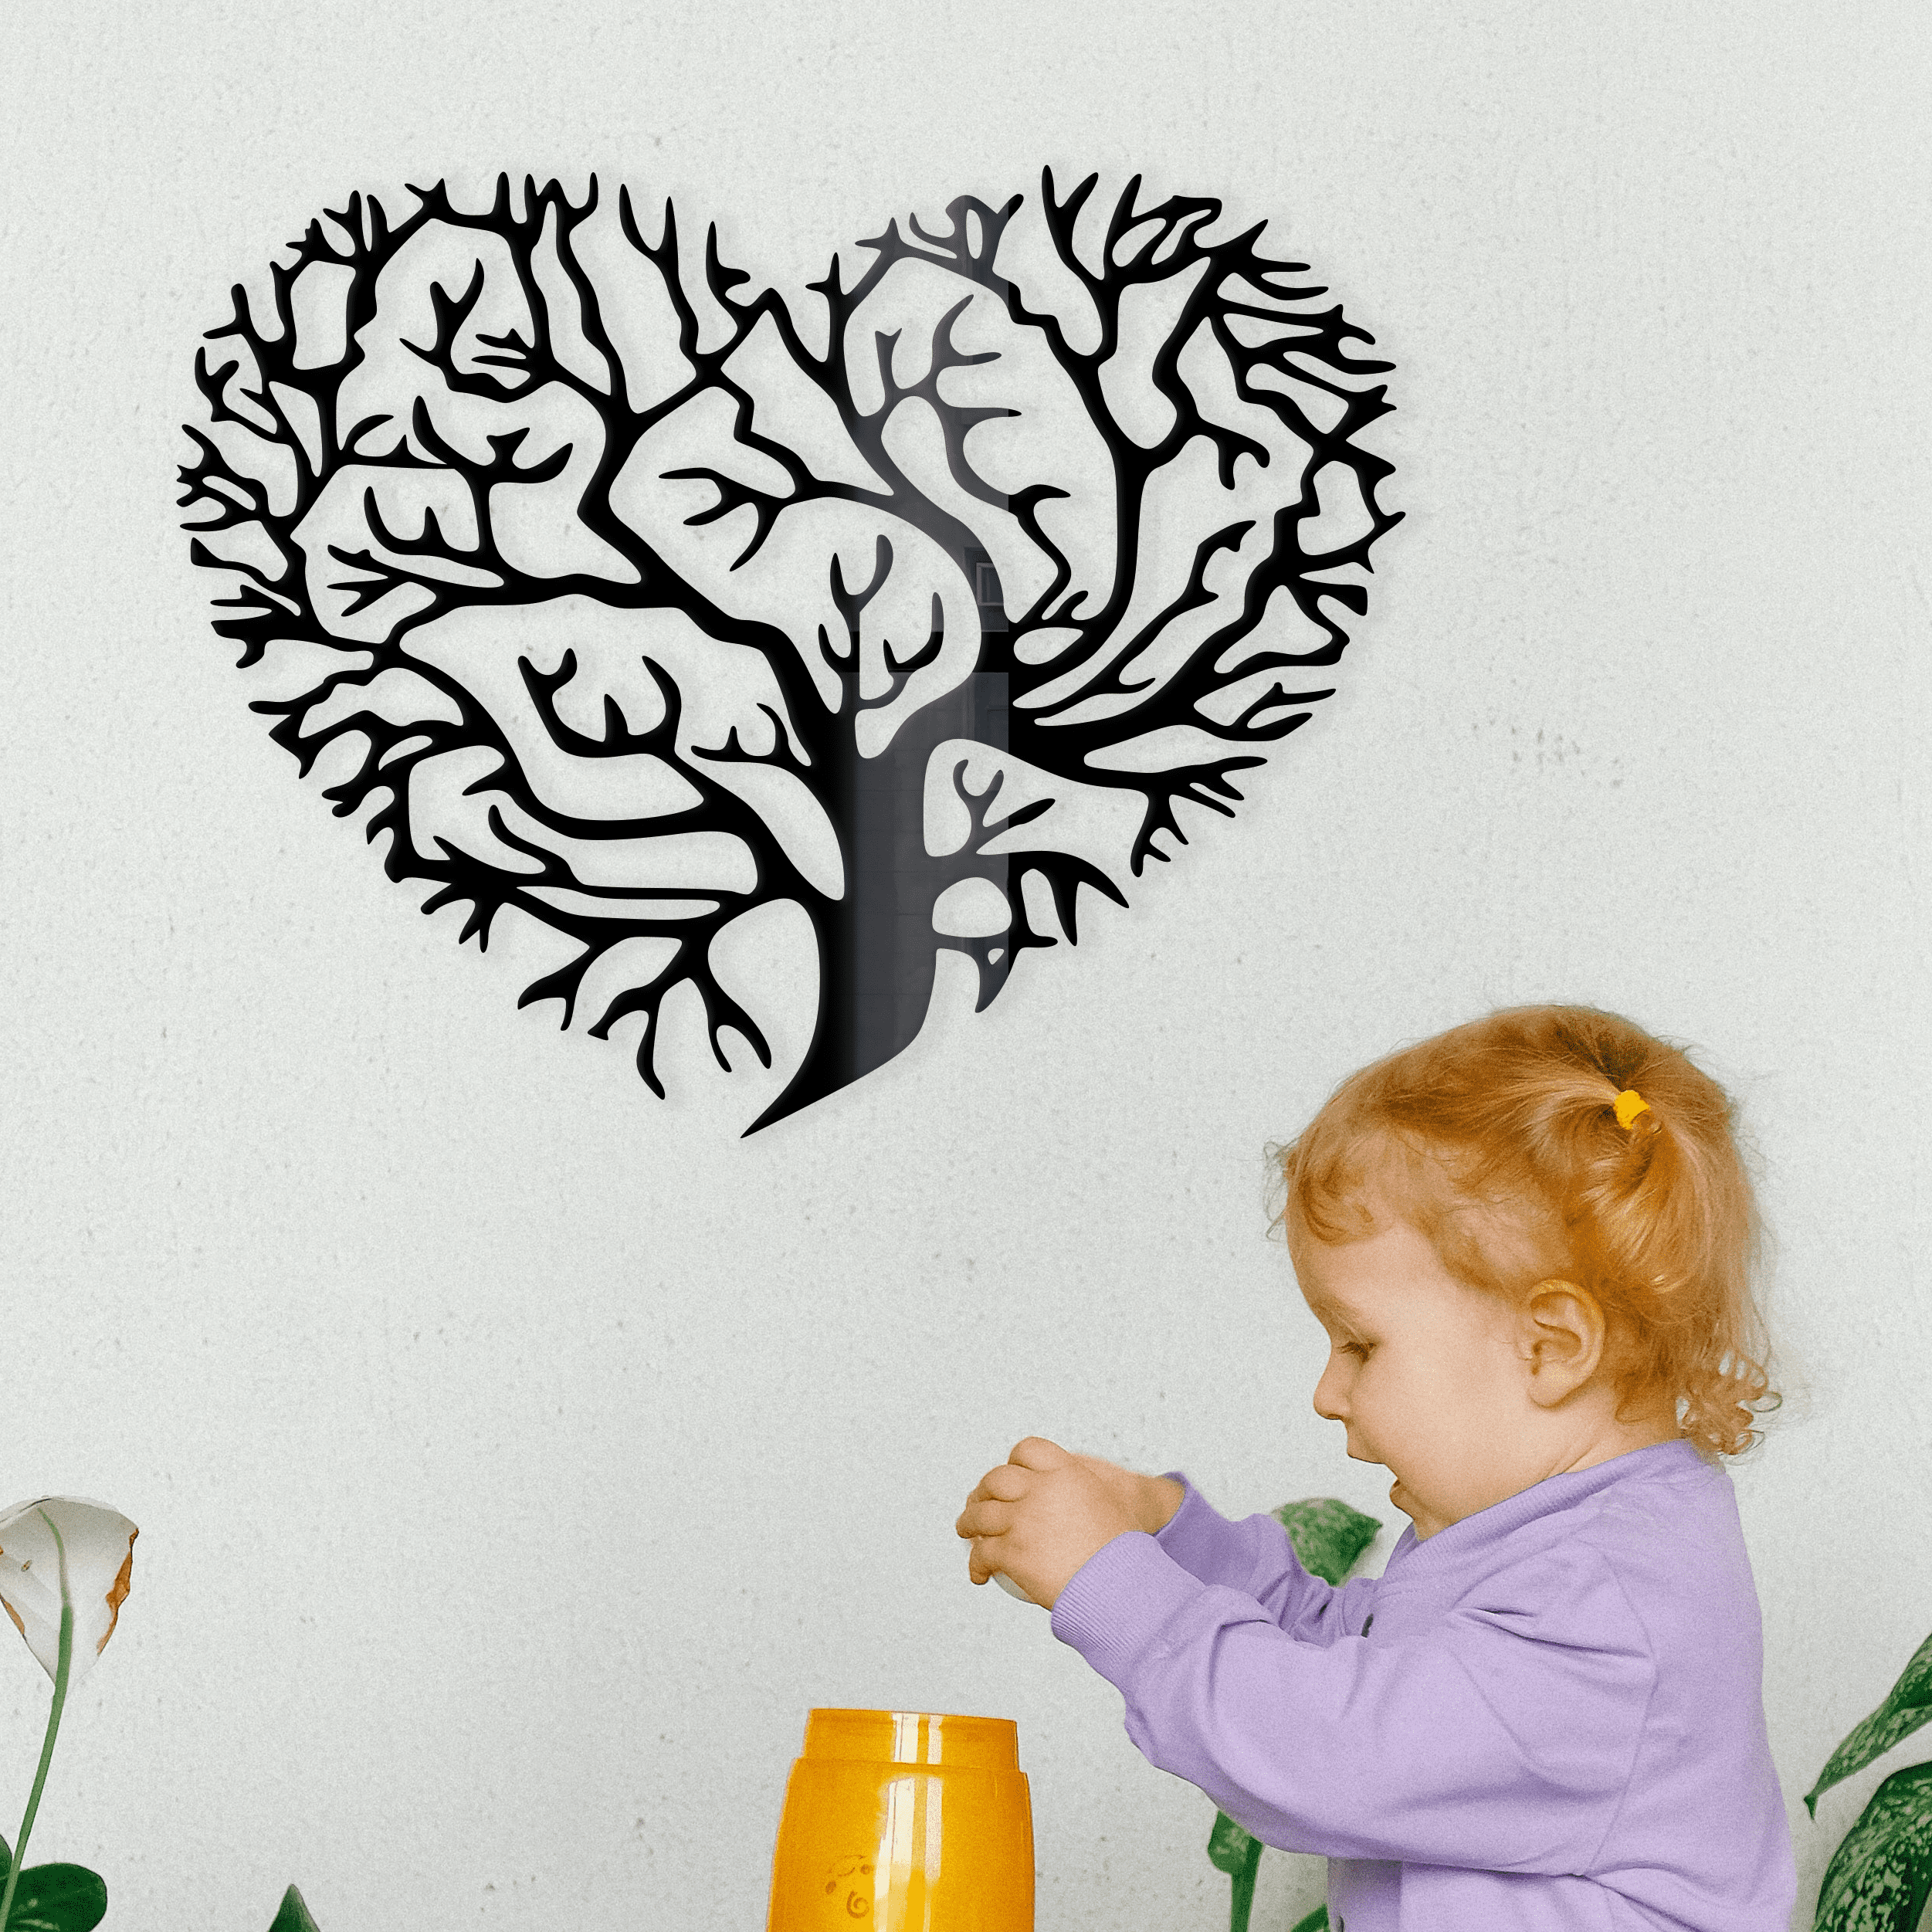 Metal wall decor of a tree of life cut into a heart shape